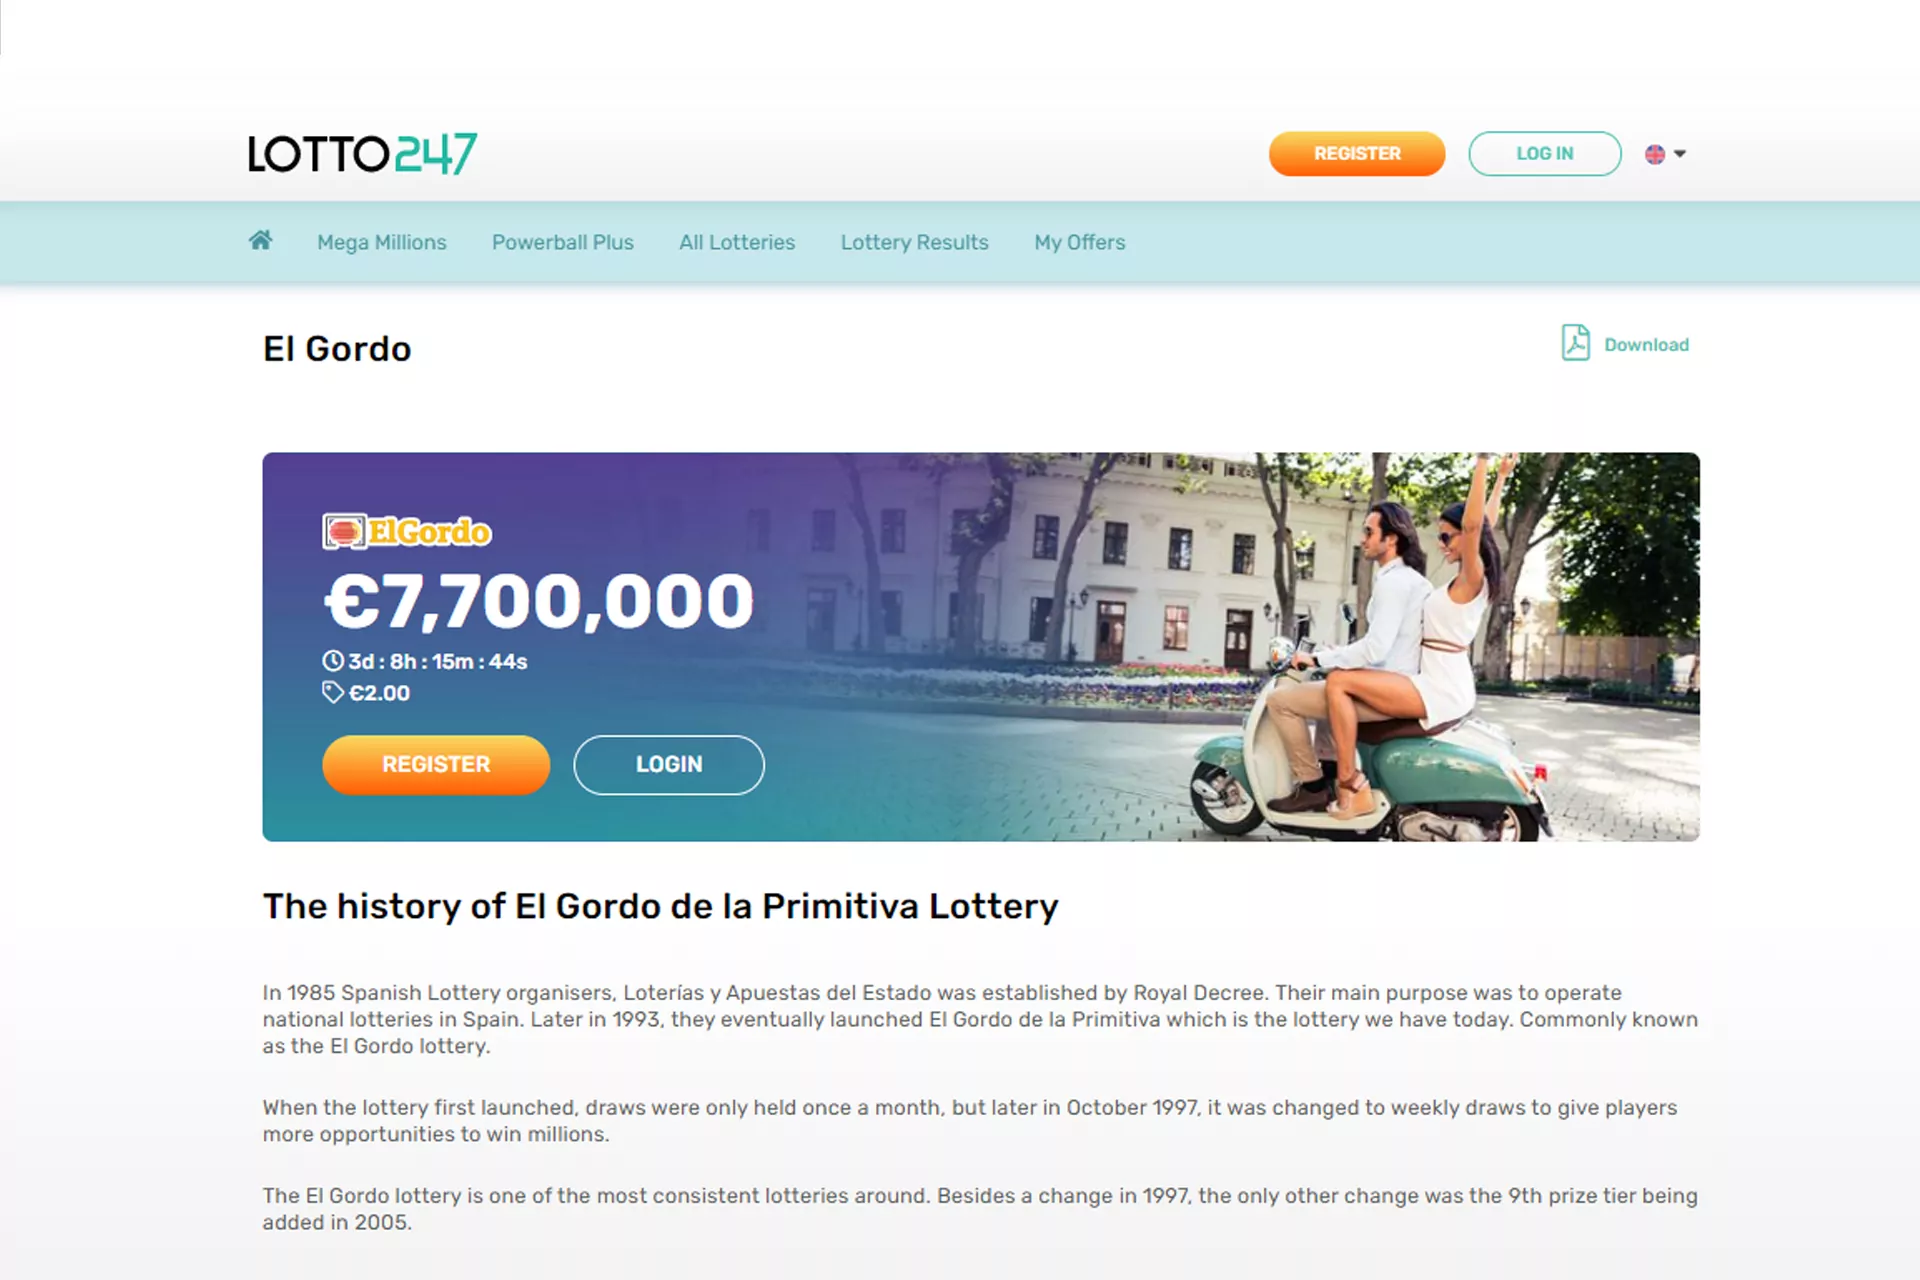 This lottery provides a maximum award of 6 million euros.